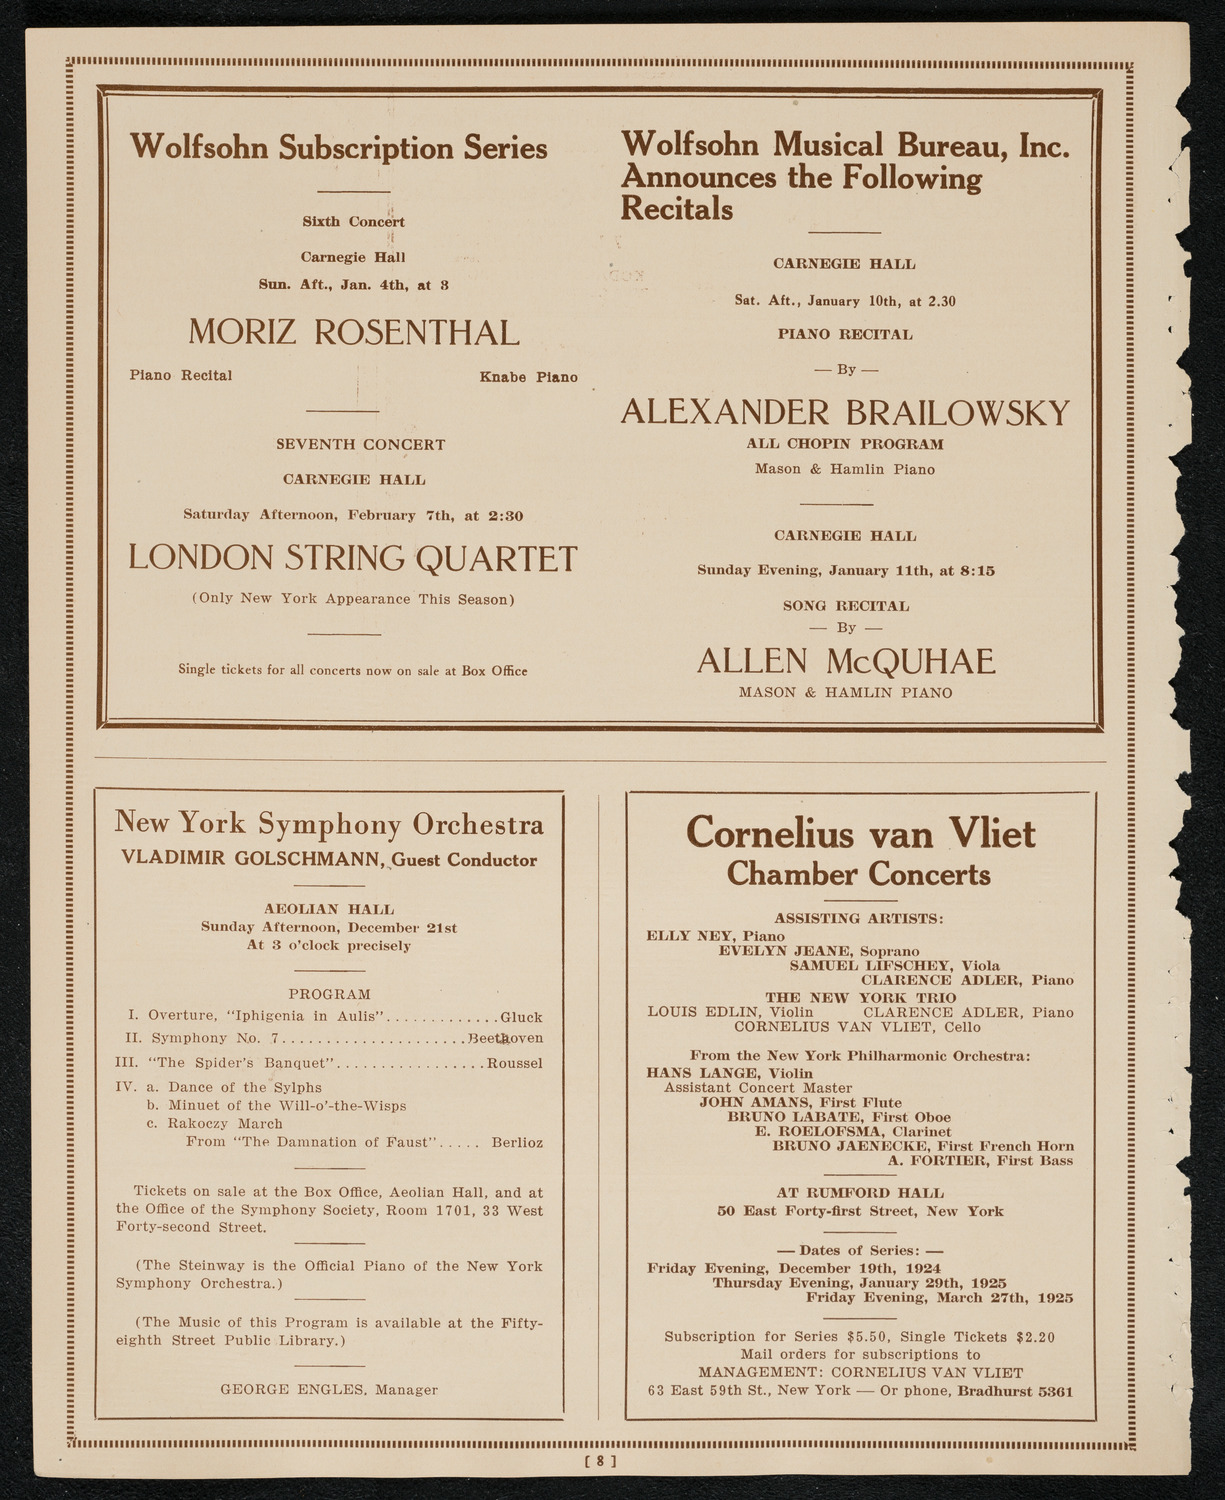 State Symphony Orchestra of New York, December 17, 1924, program page 8